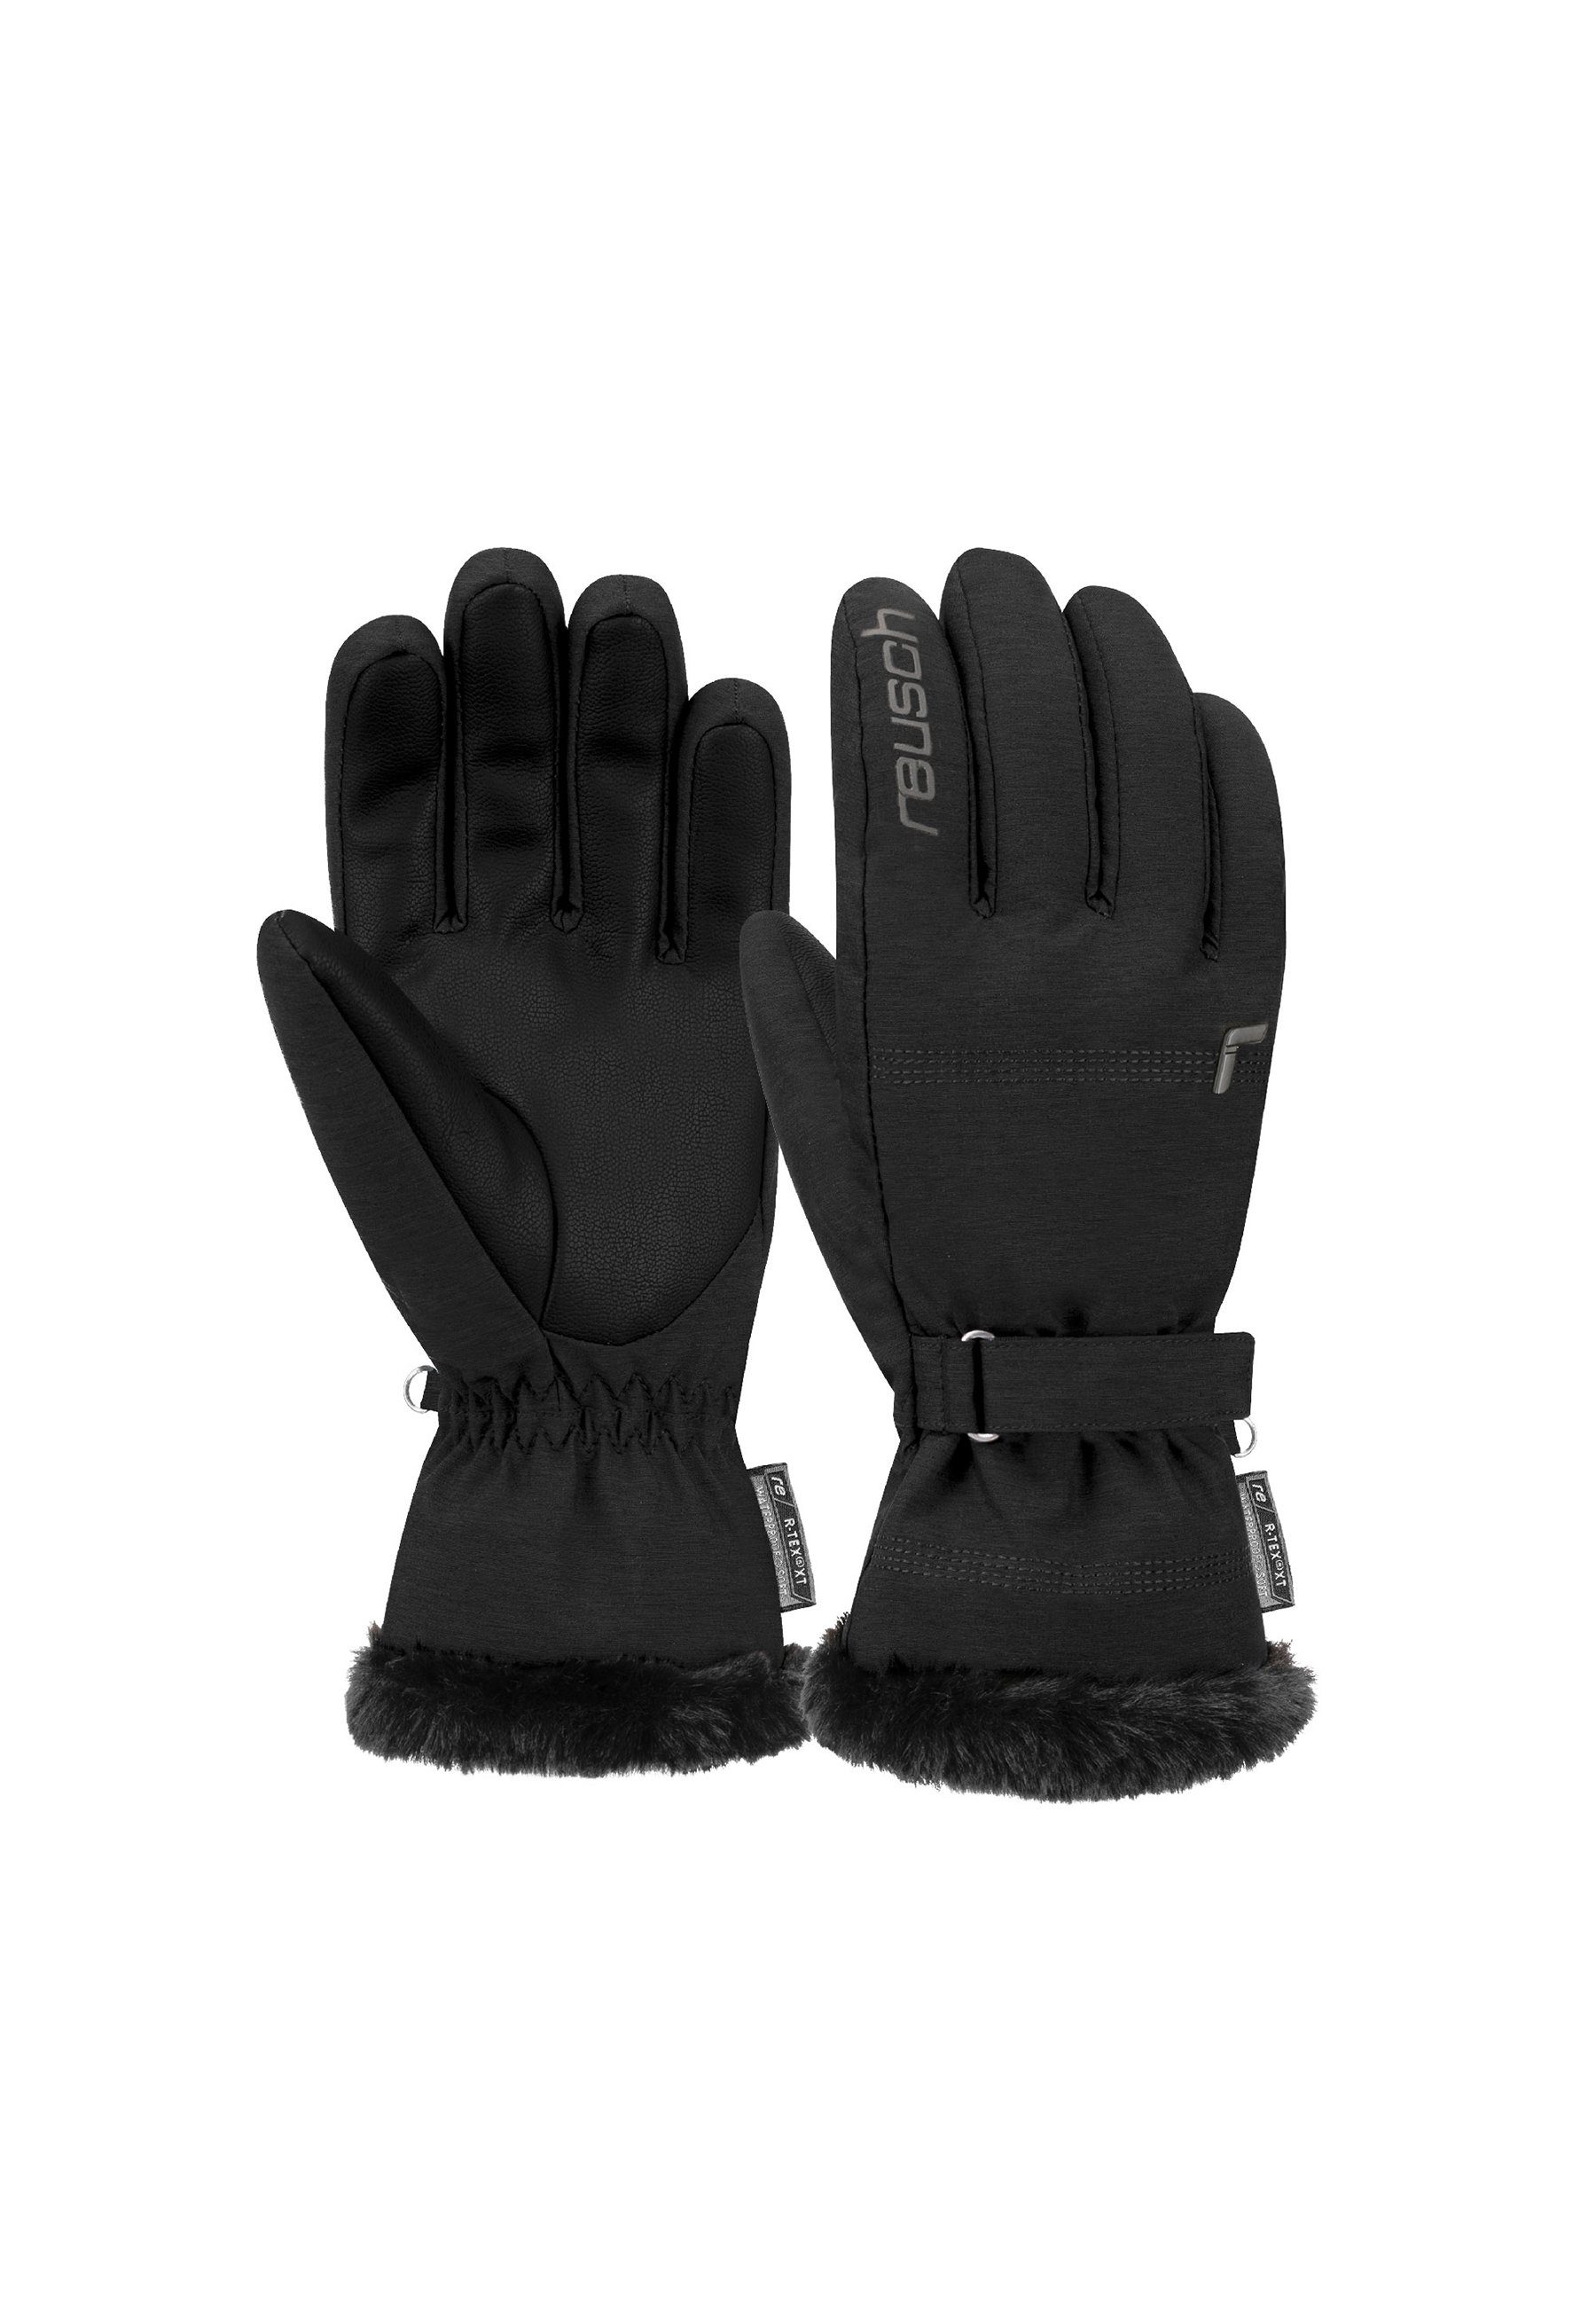 Reusch Skihandschuhe Luna R-TEX XT in sportlichem Design schwarz | Handschuhe